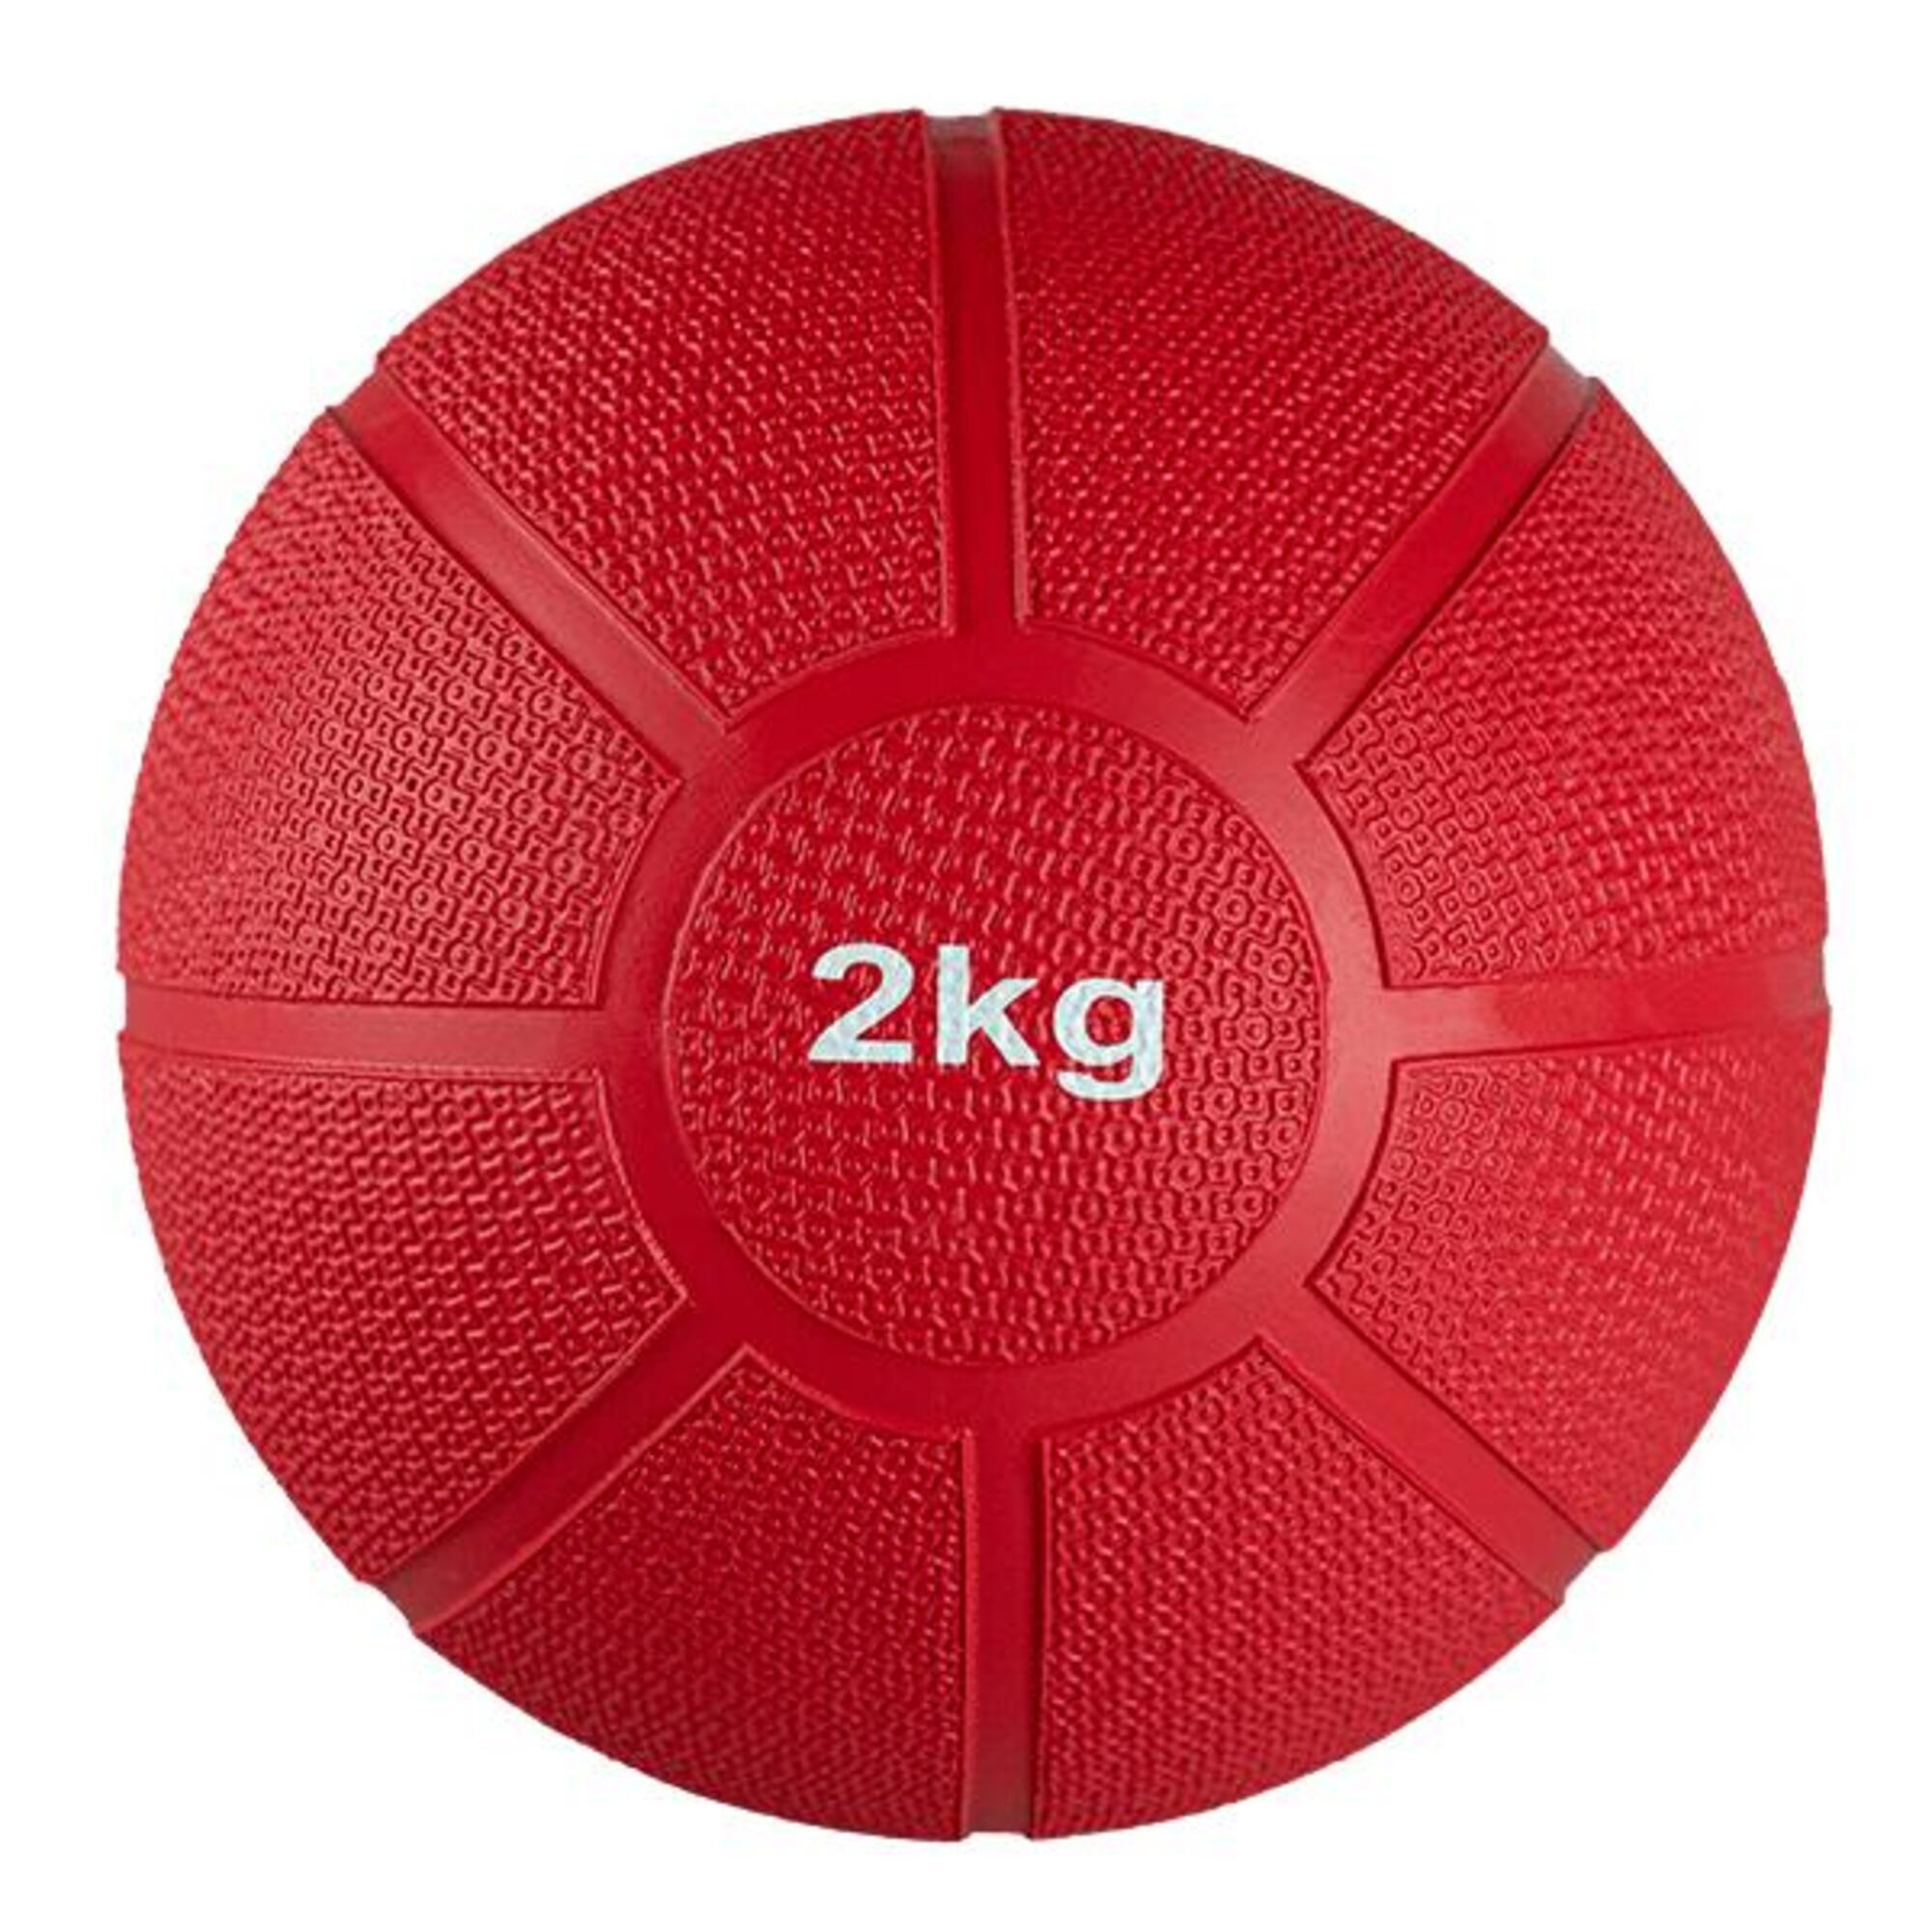 Medicine ball - Piłka lekarska - 2kg